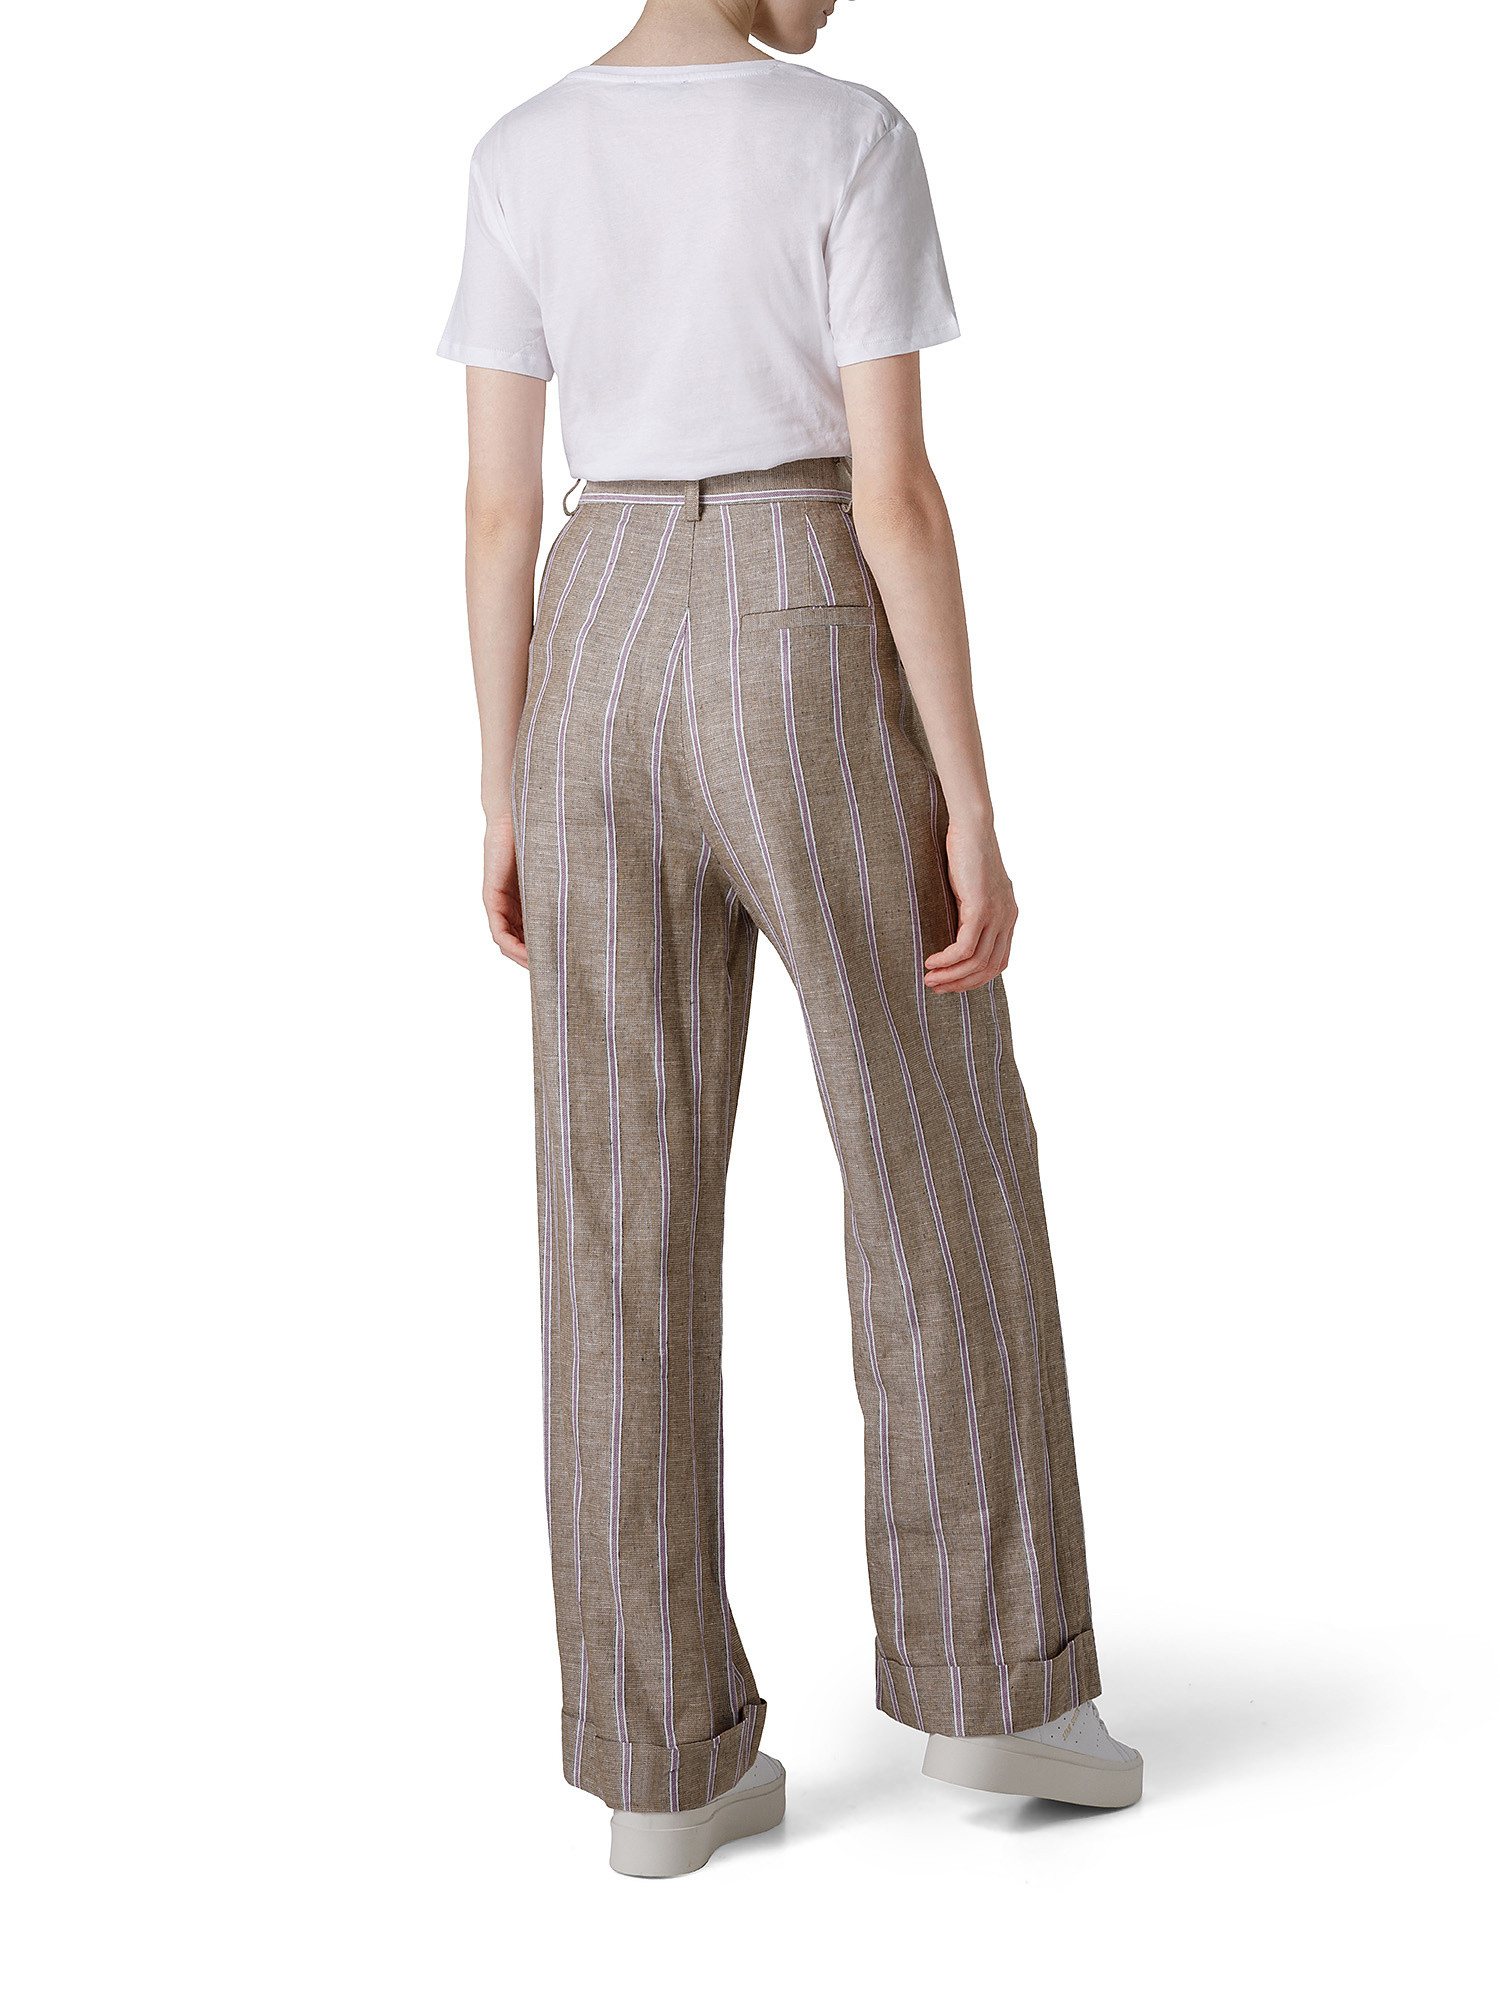 Pantalone, Multicolor, large image number 3